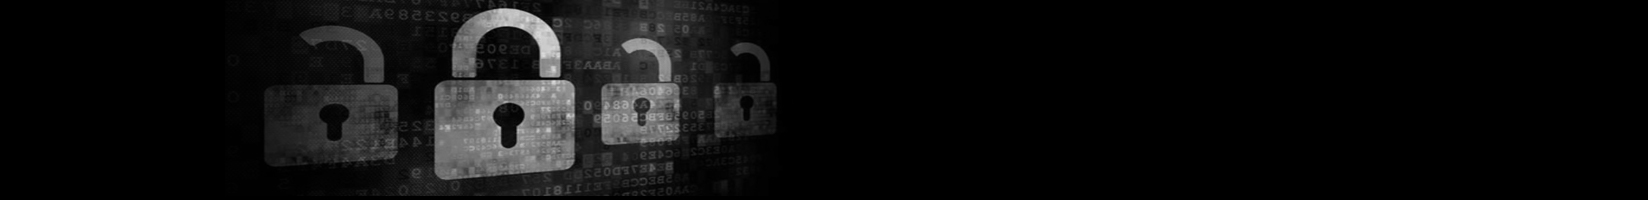 Let's Encrypt - Free SSL